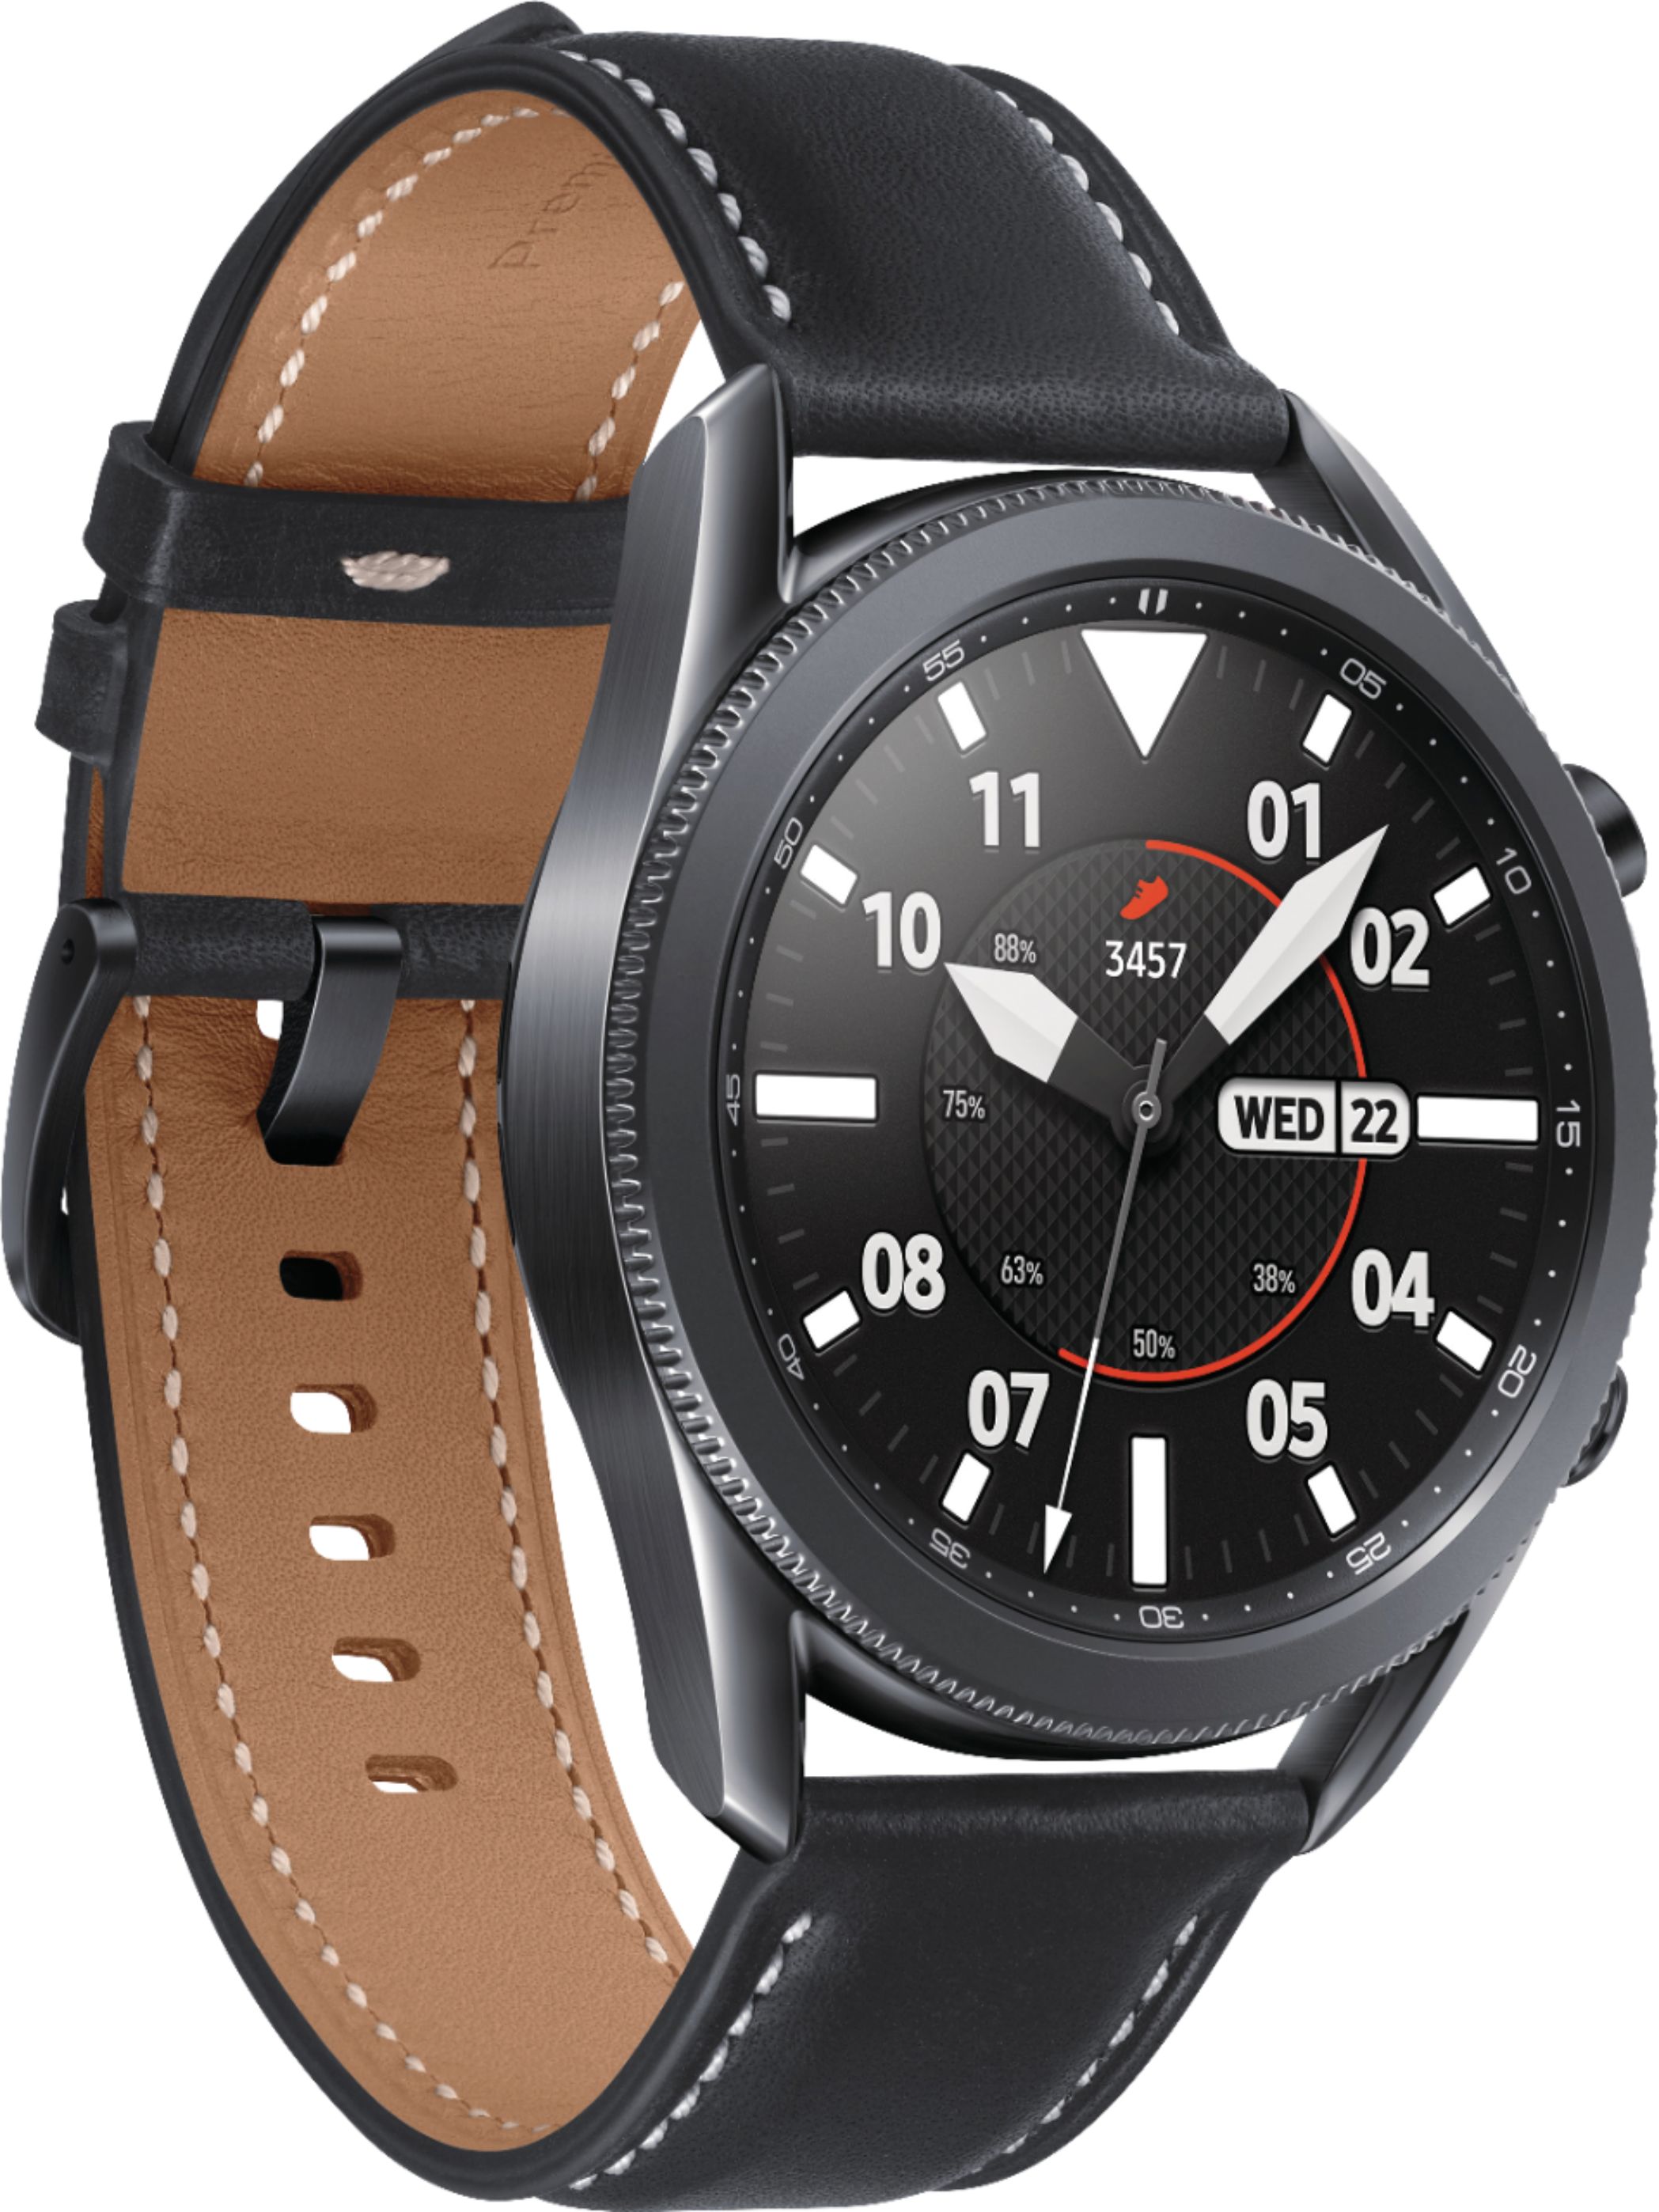 Samsung Geek Squad Certified Refurbished Galaxy Watch3 Smartwatch